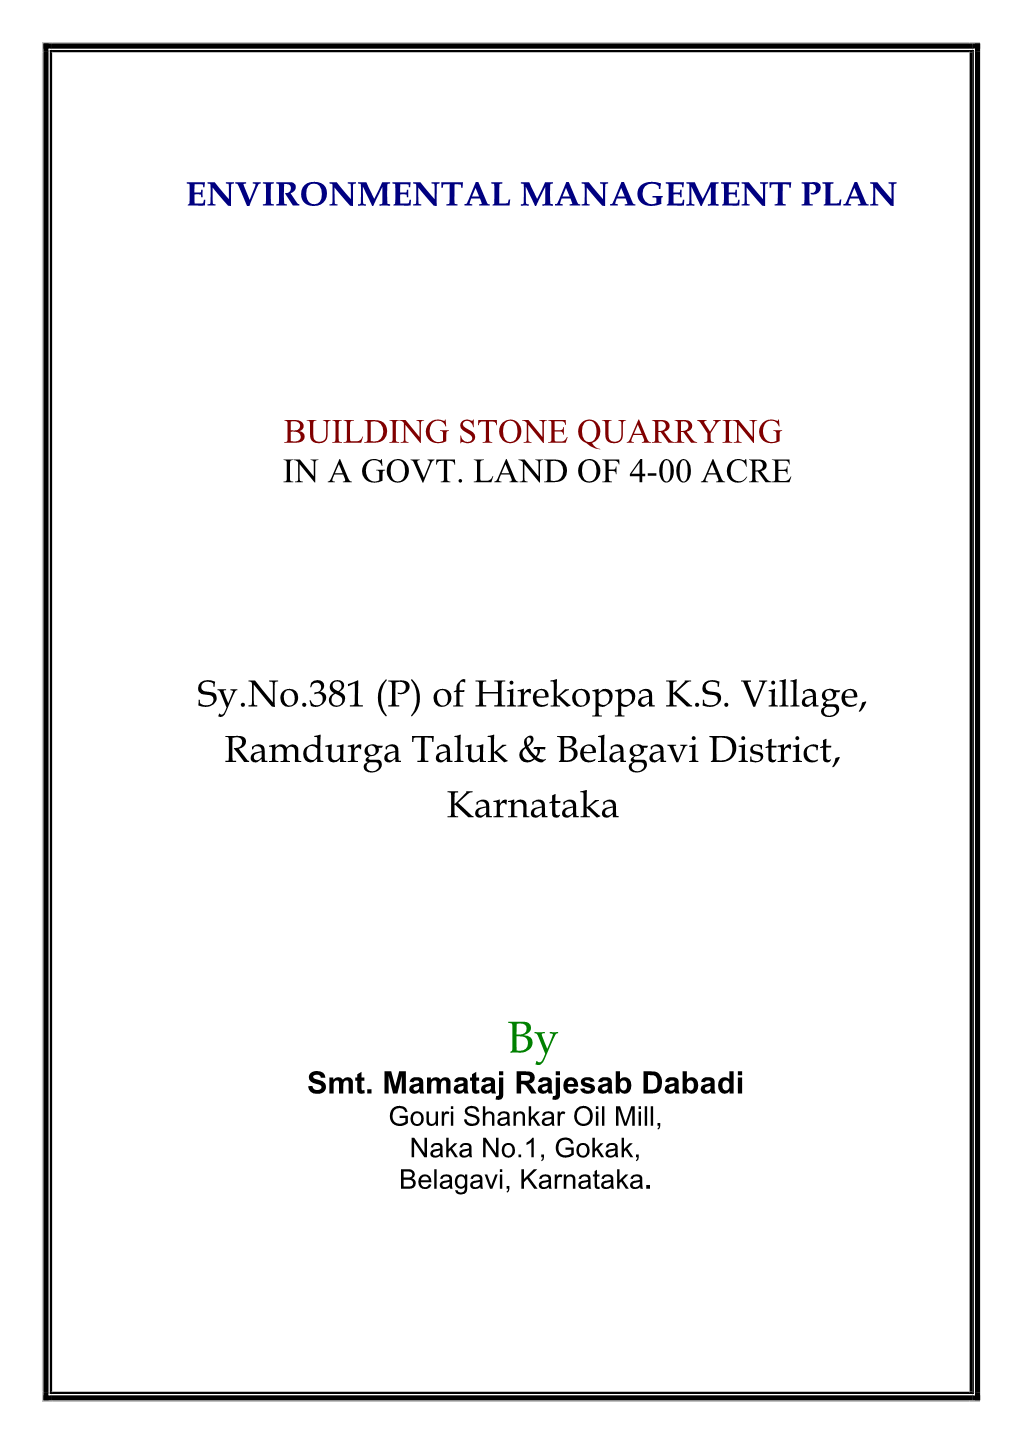 Of Hirekoppa KS Village, Ramdurga Taluk & Belagavi District, Karnataka